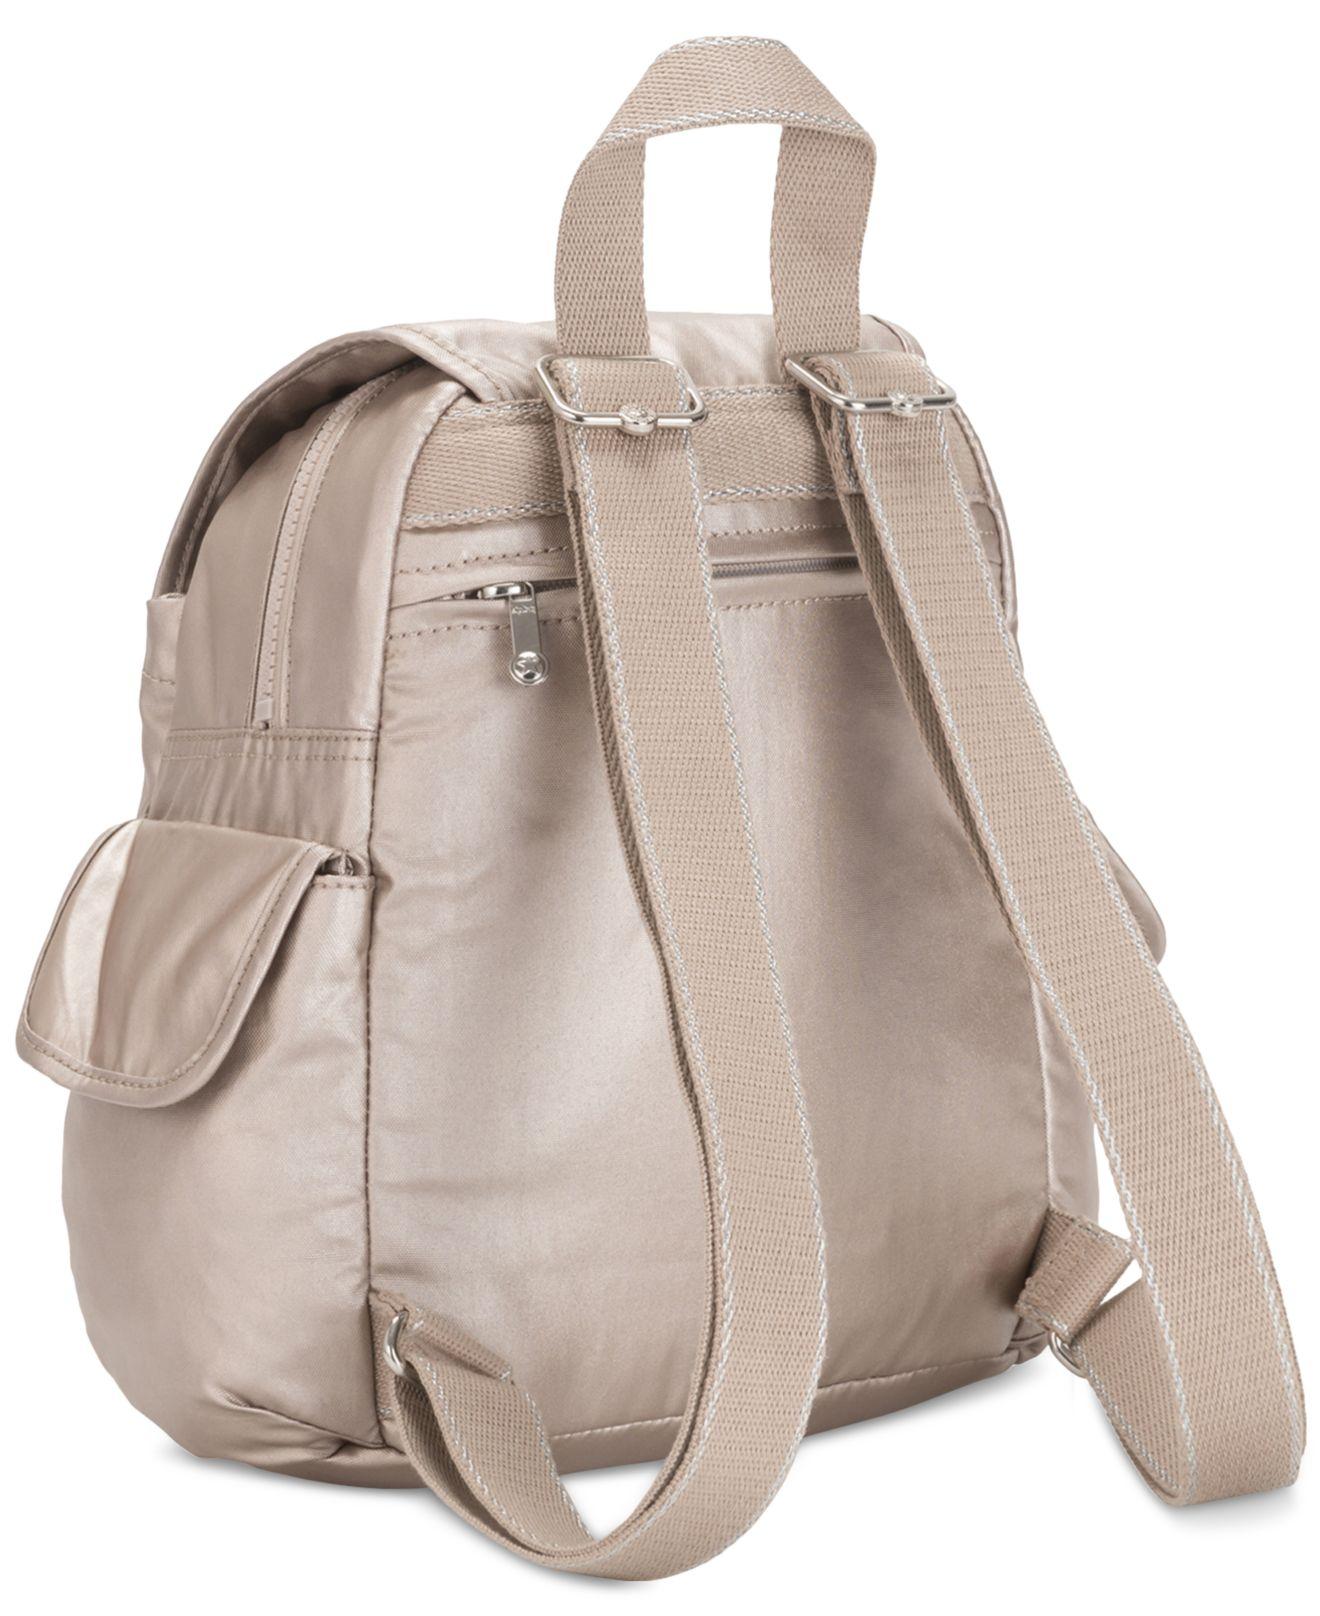 Kipling City Pack Mini Backpack in Natural | Lyst